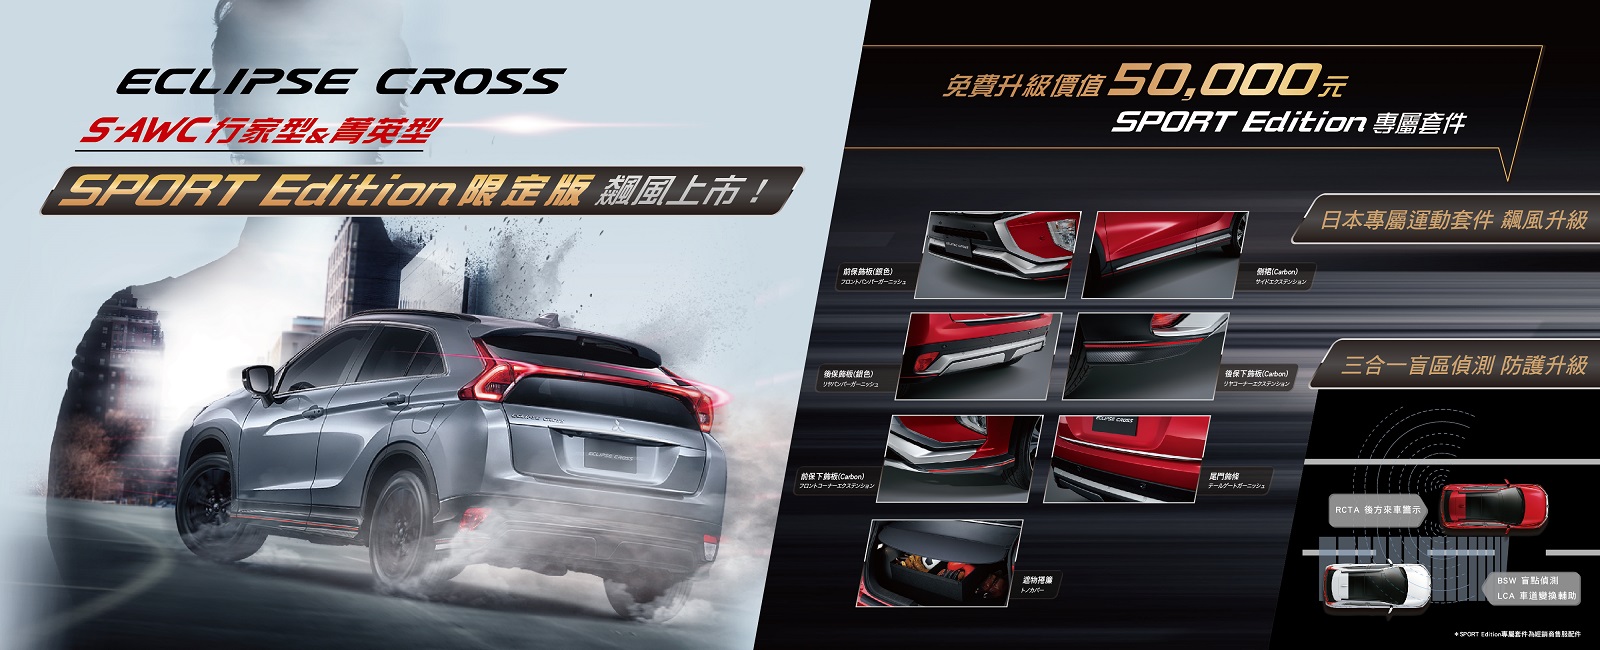 Mitsubishi Eclipse Cross 9 月推出 Sport Edition 限定版特仕車。